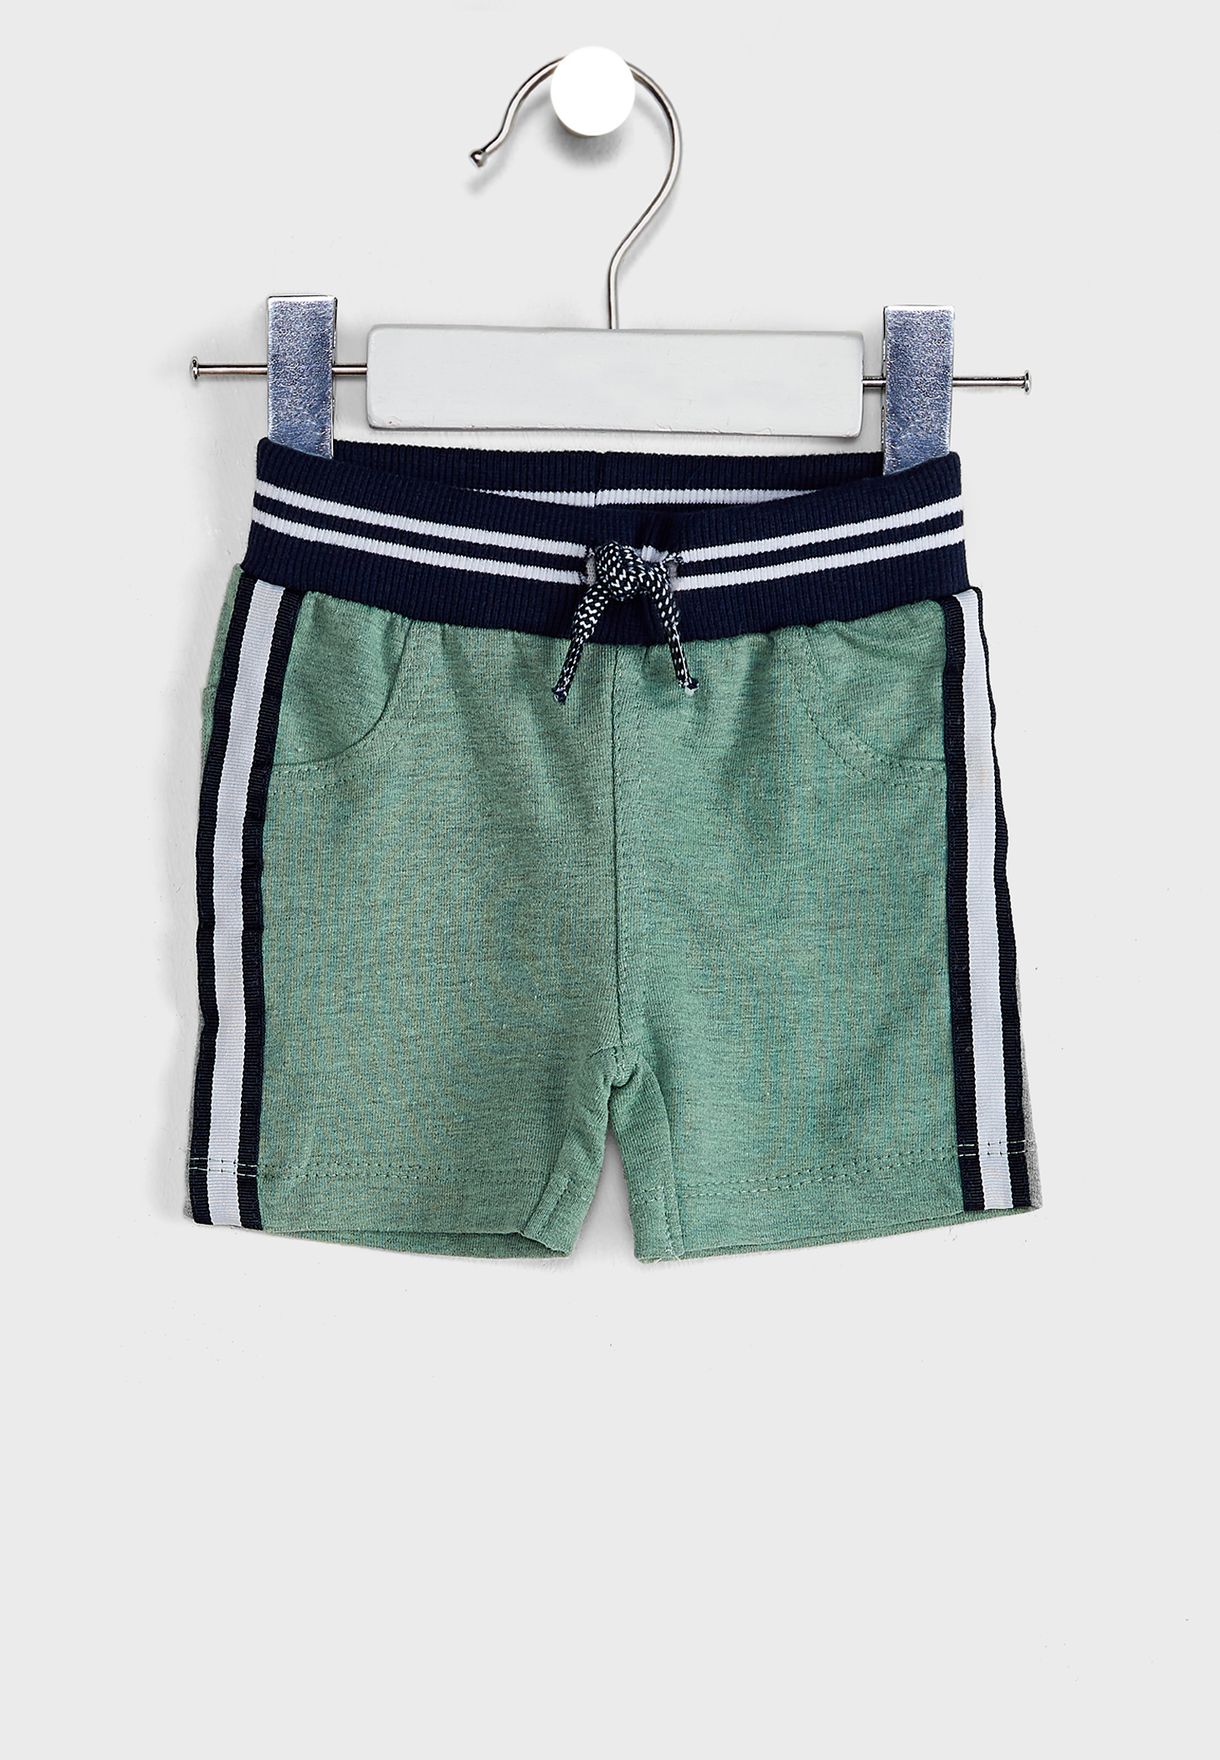 Infant Casual T-Shirt + Shorts Set